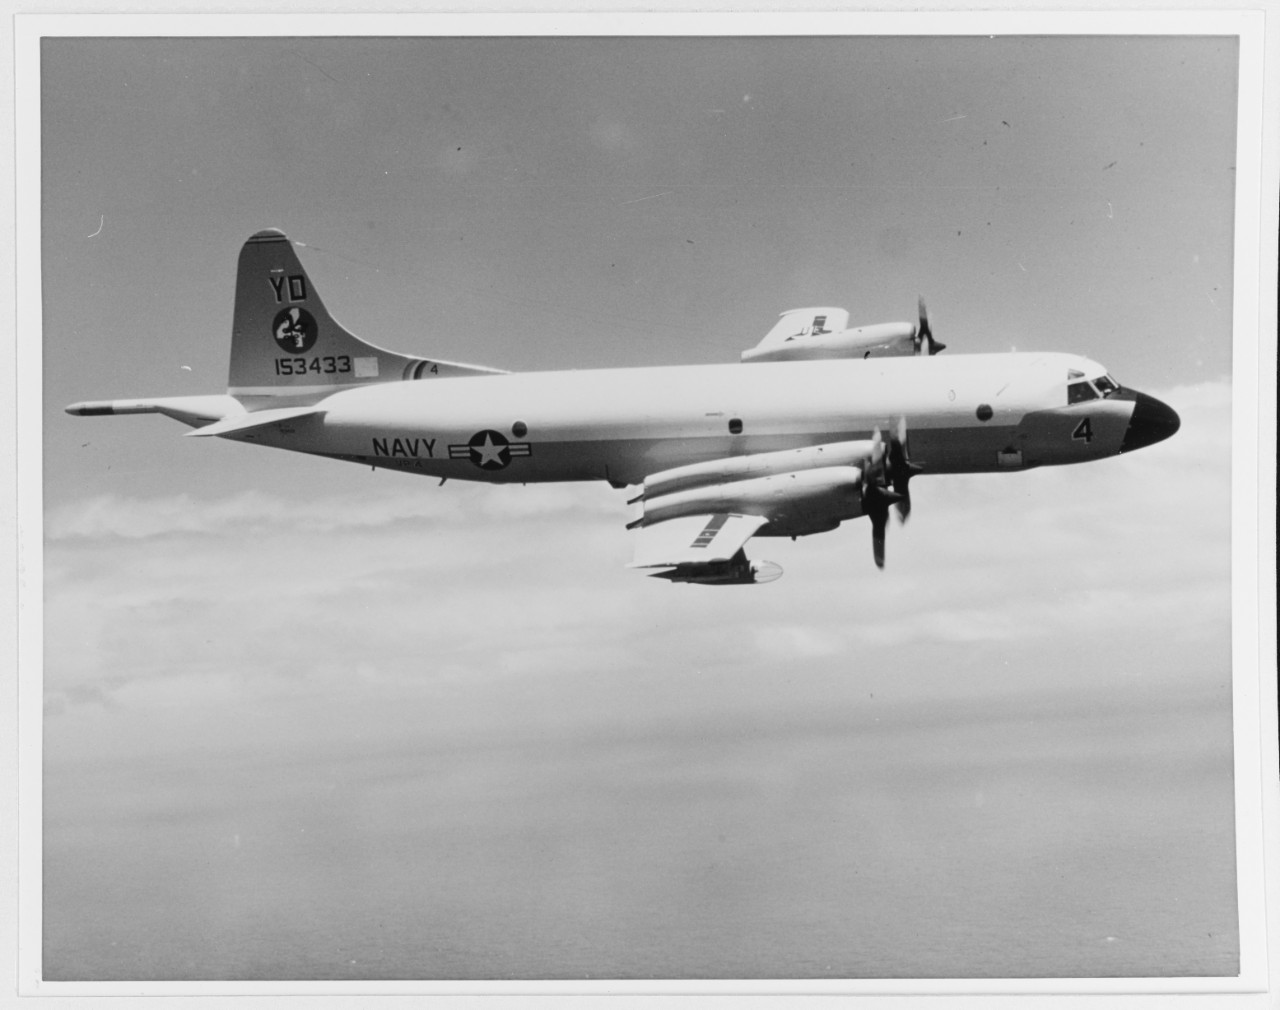 Lockheed P-3B "Orion" (Bu# 153433) of VP-4